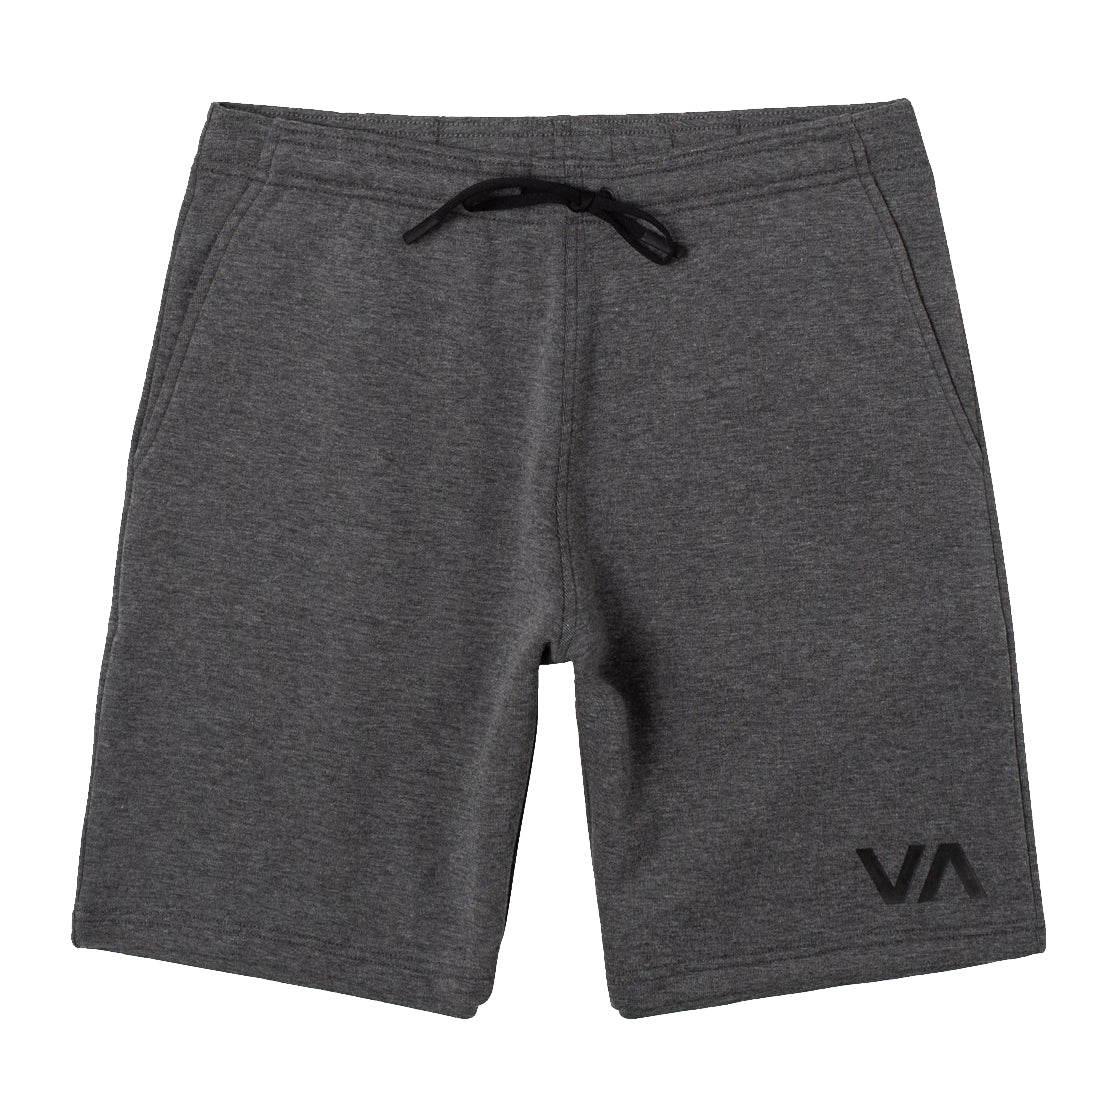 RVCA Sport IV Shorts SYT S